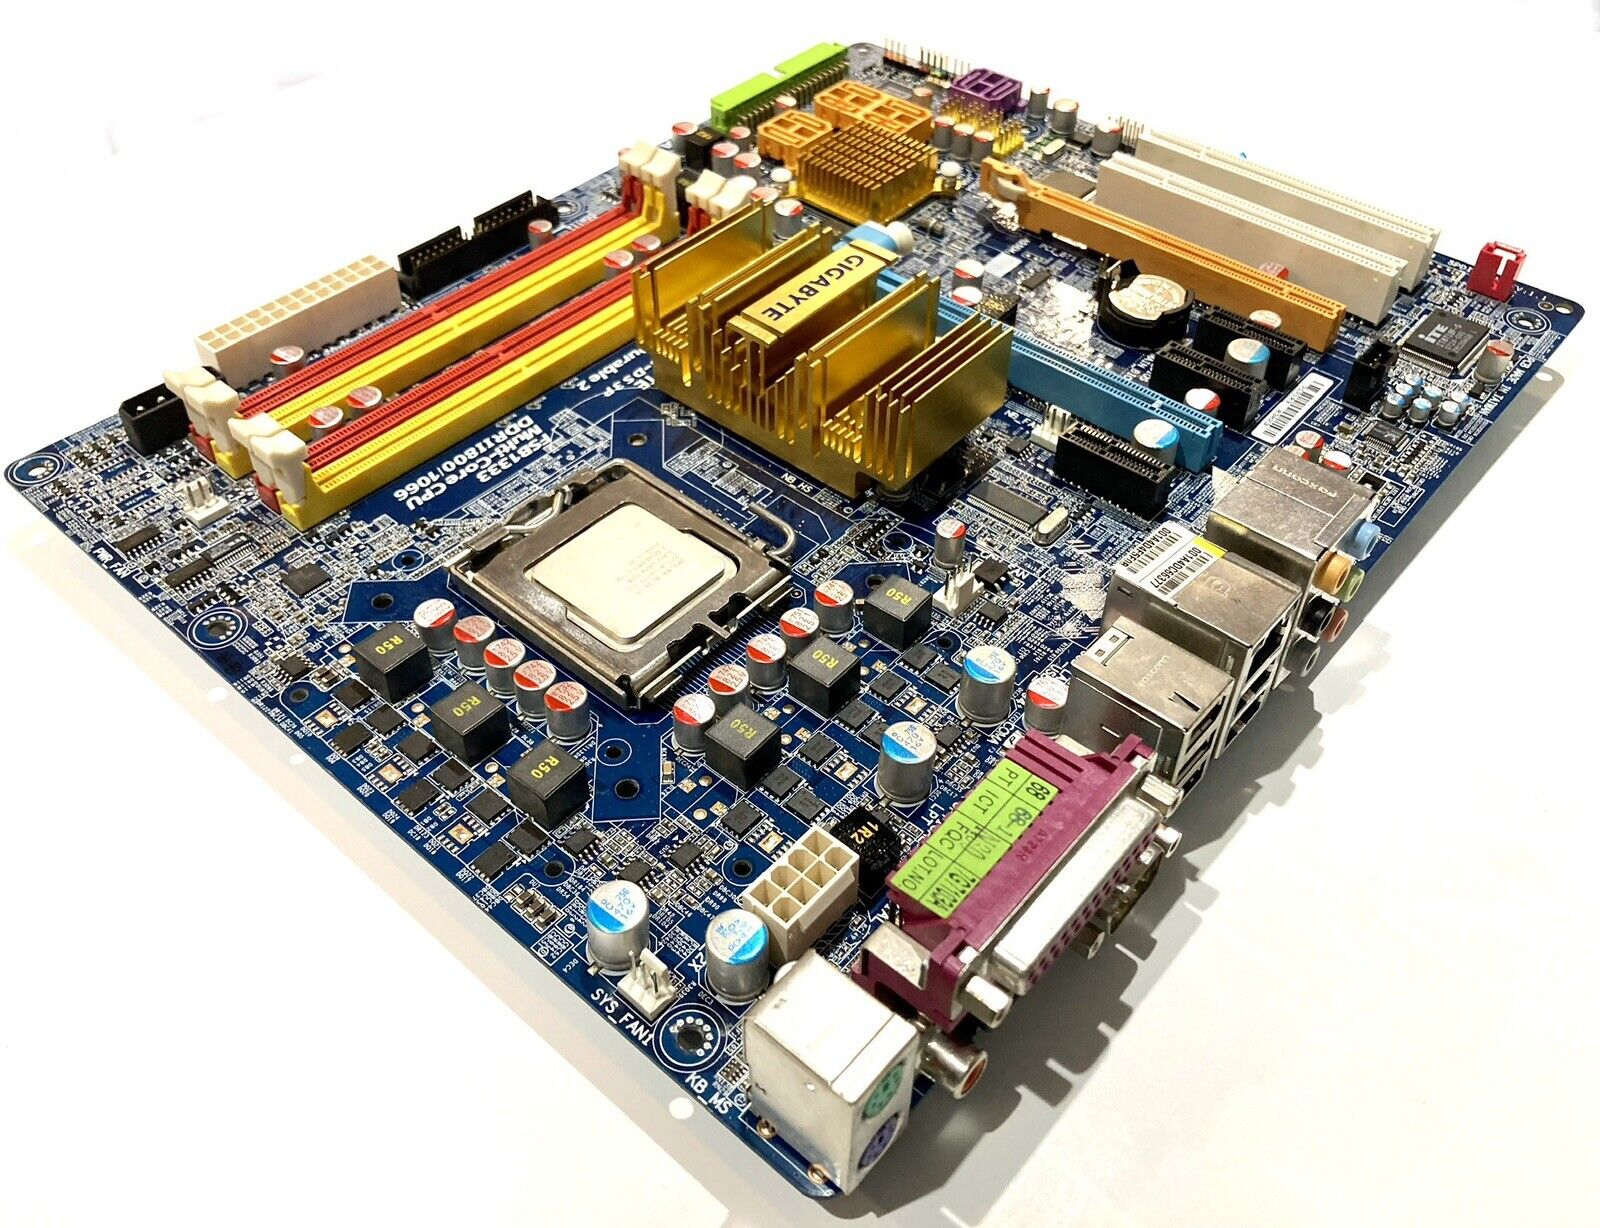 Gigabyte GA-P35-DS3P Rev 1.1 LGA775, Intel Core2 E6750 2.66ghz CPU, 4GB DDR2 800